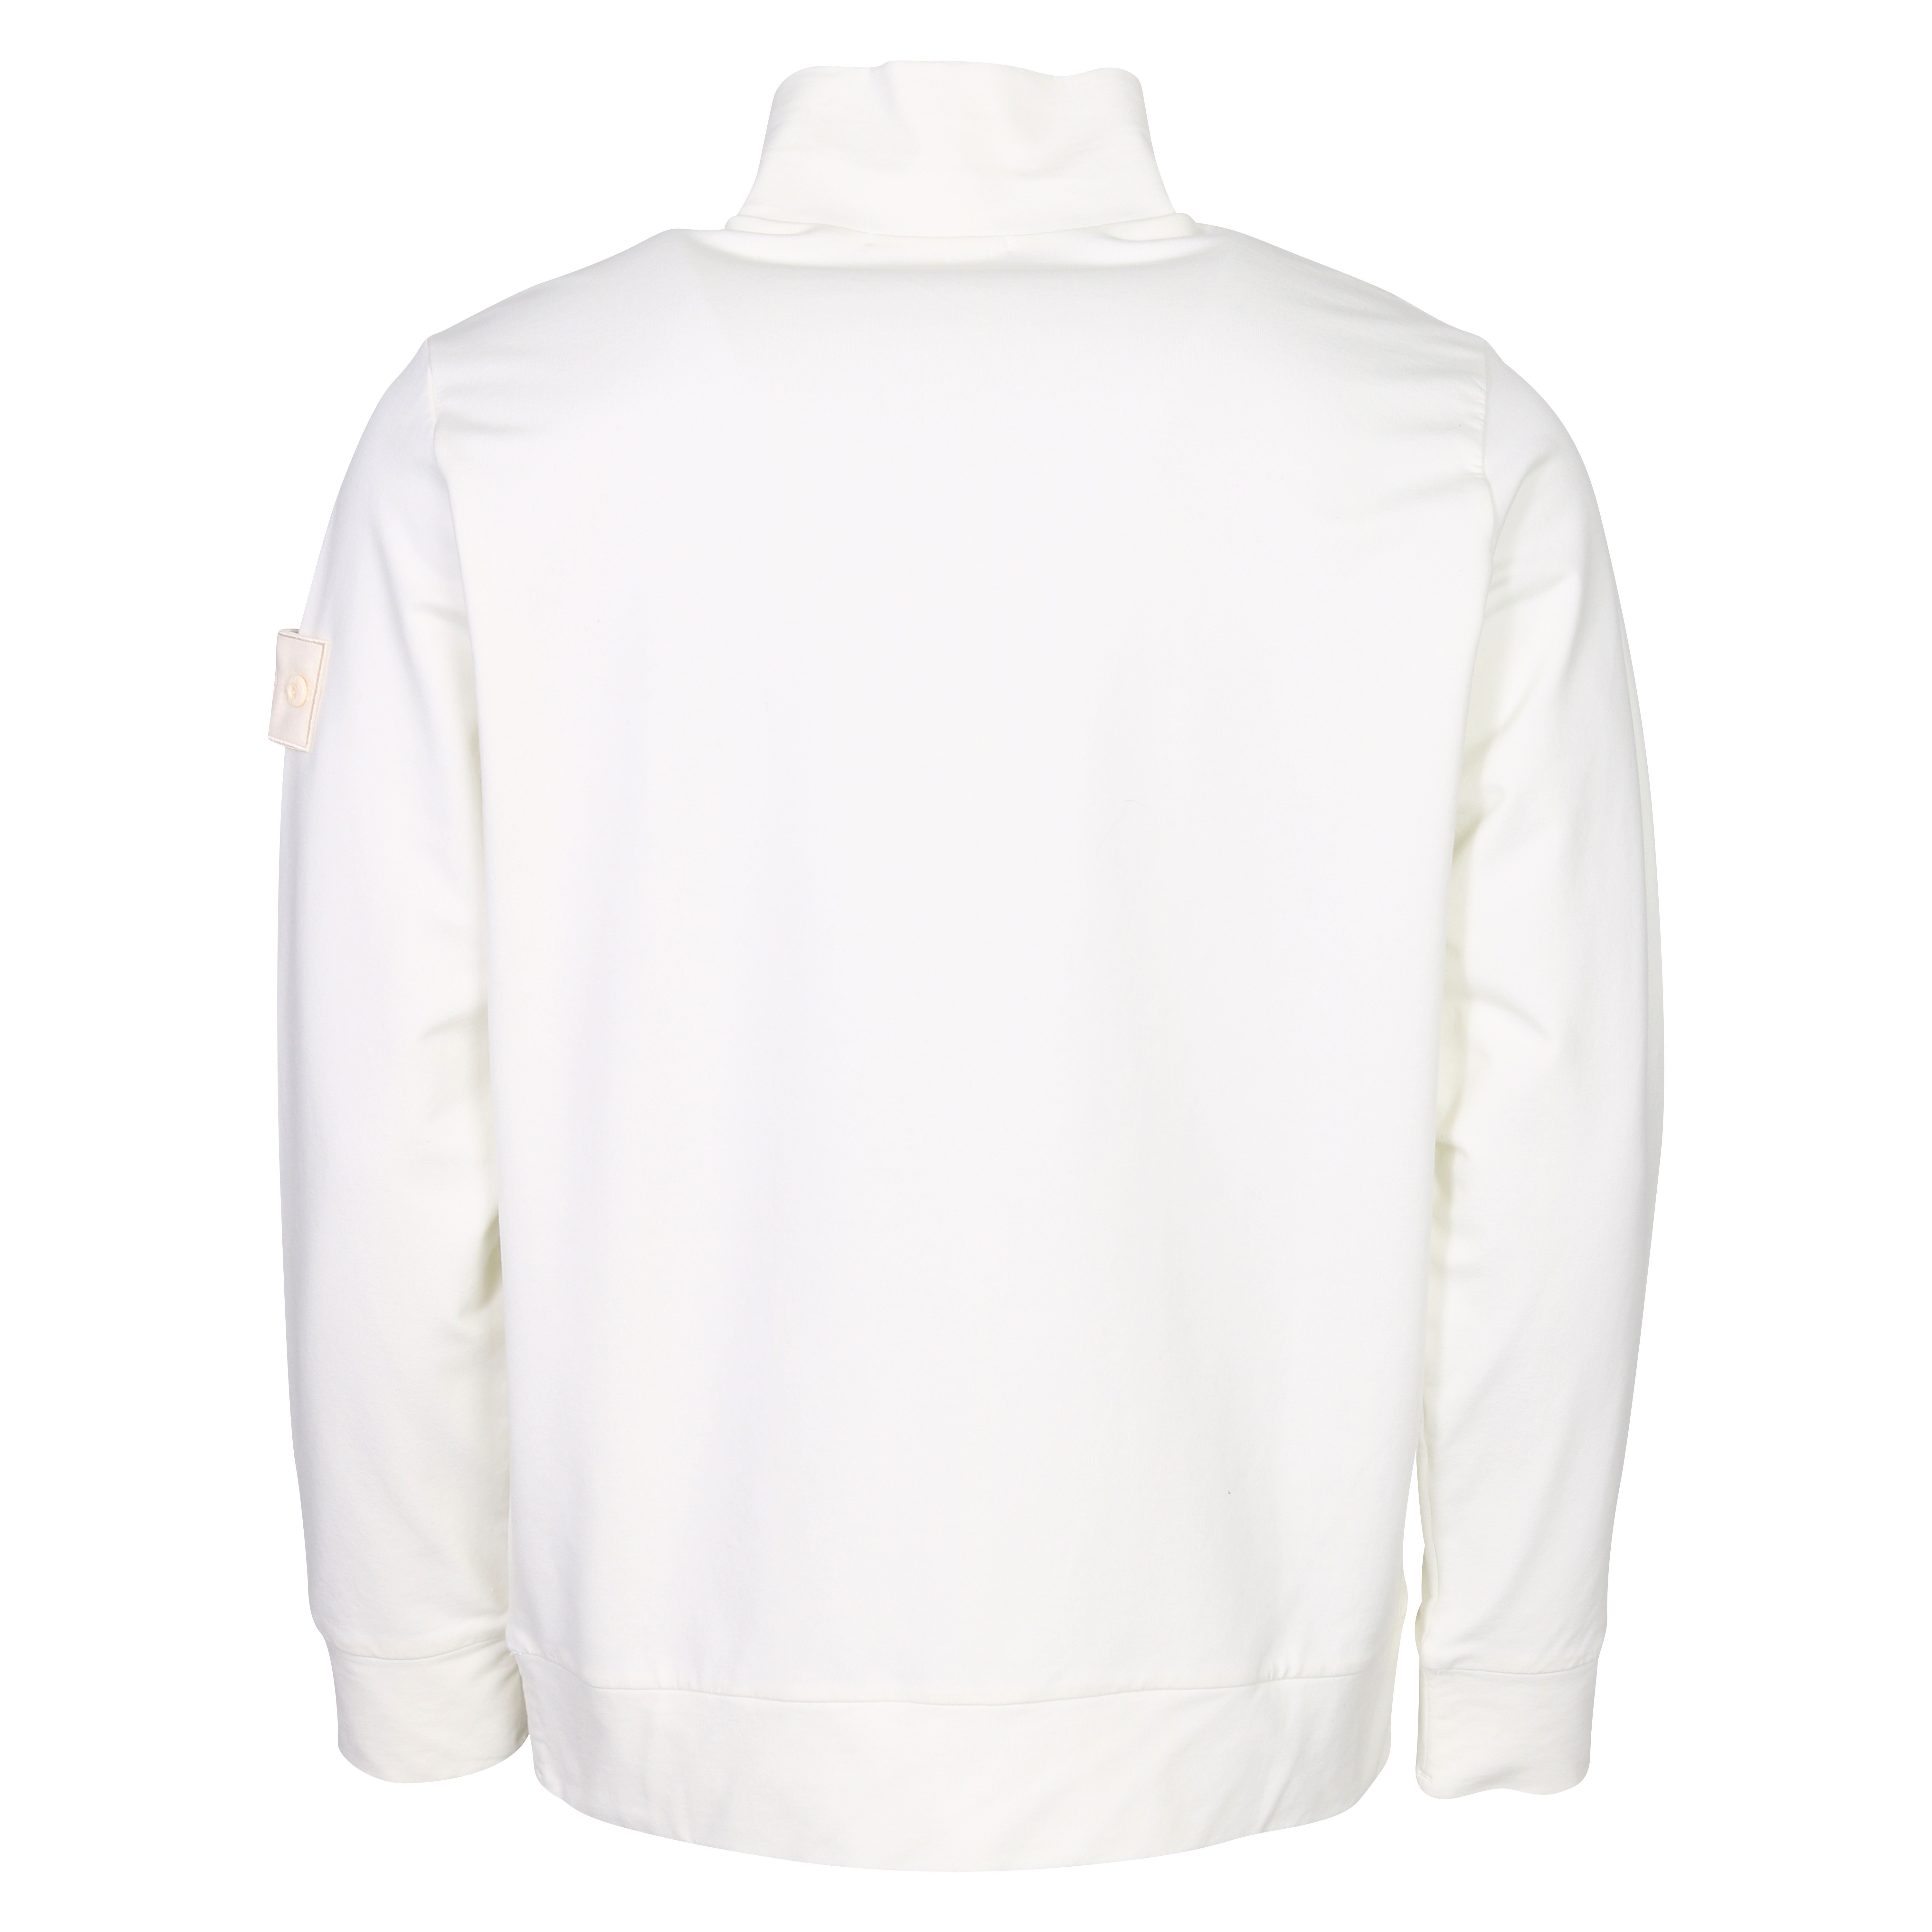 Stone Island Ghost Piece Zip Sweater in Off White 2XL